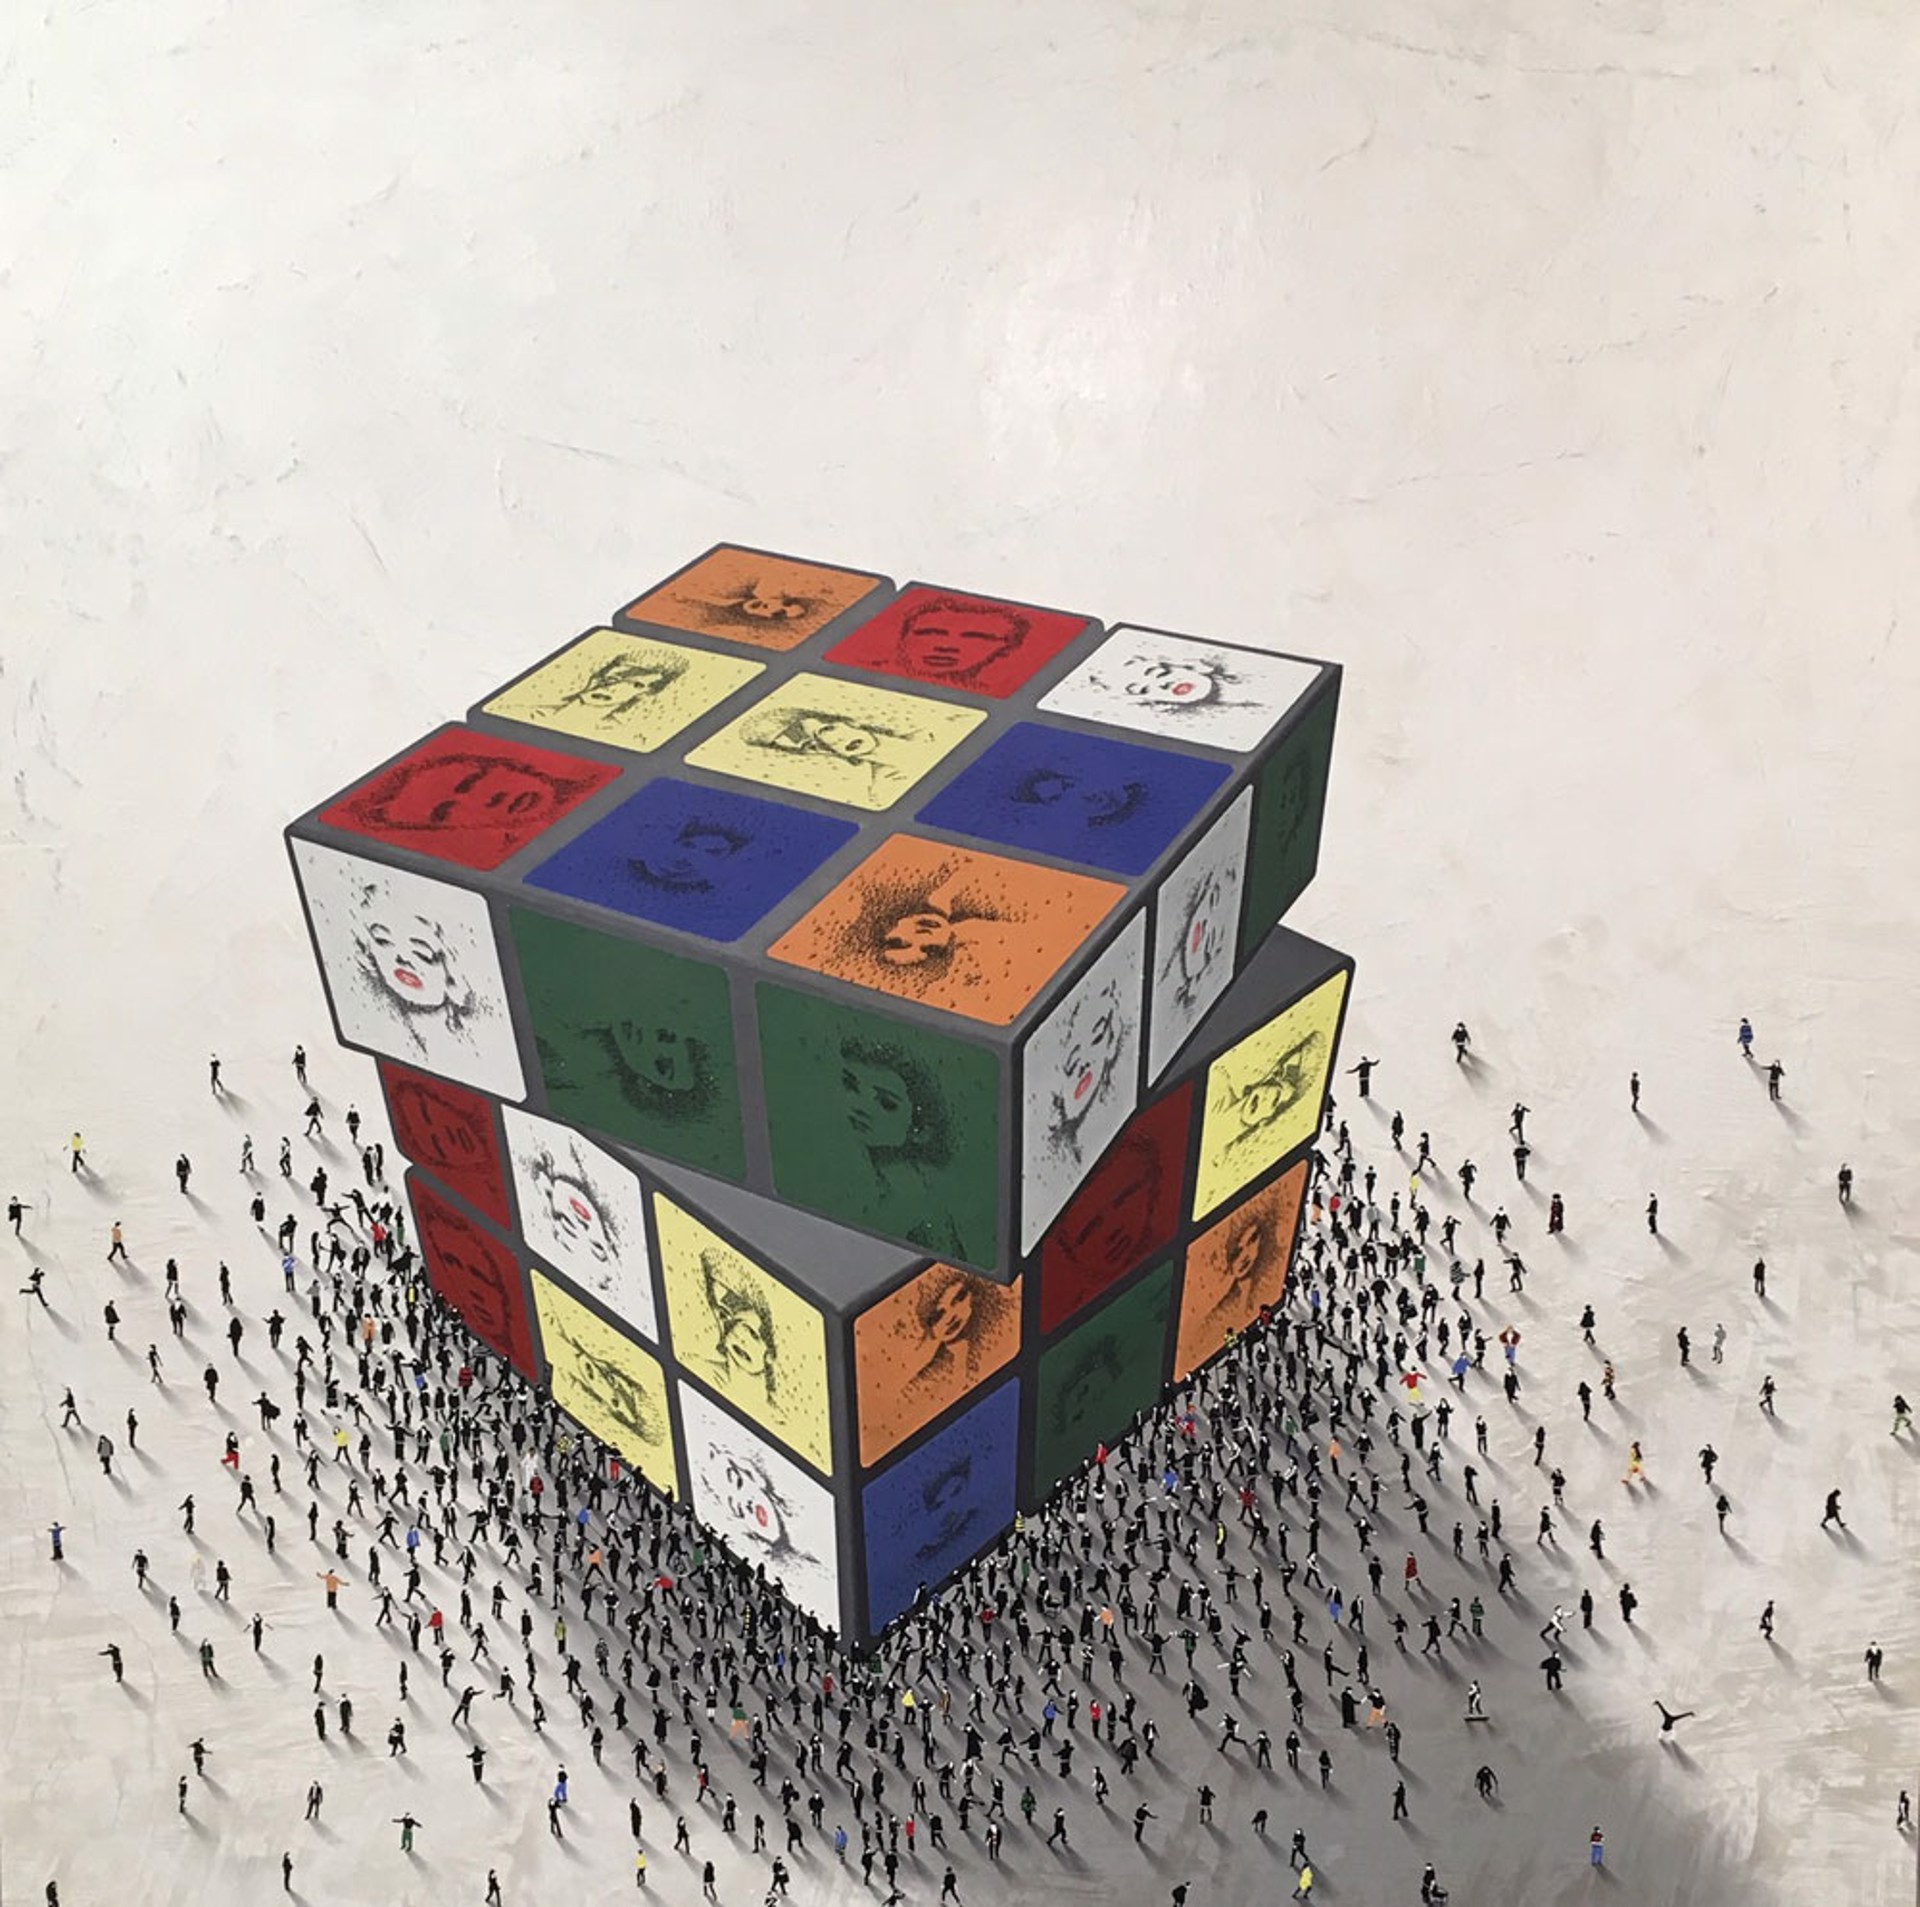 Cubed Sophistication (Cubed Culture) by Craig Alan, Populus Homage